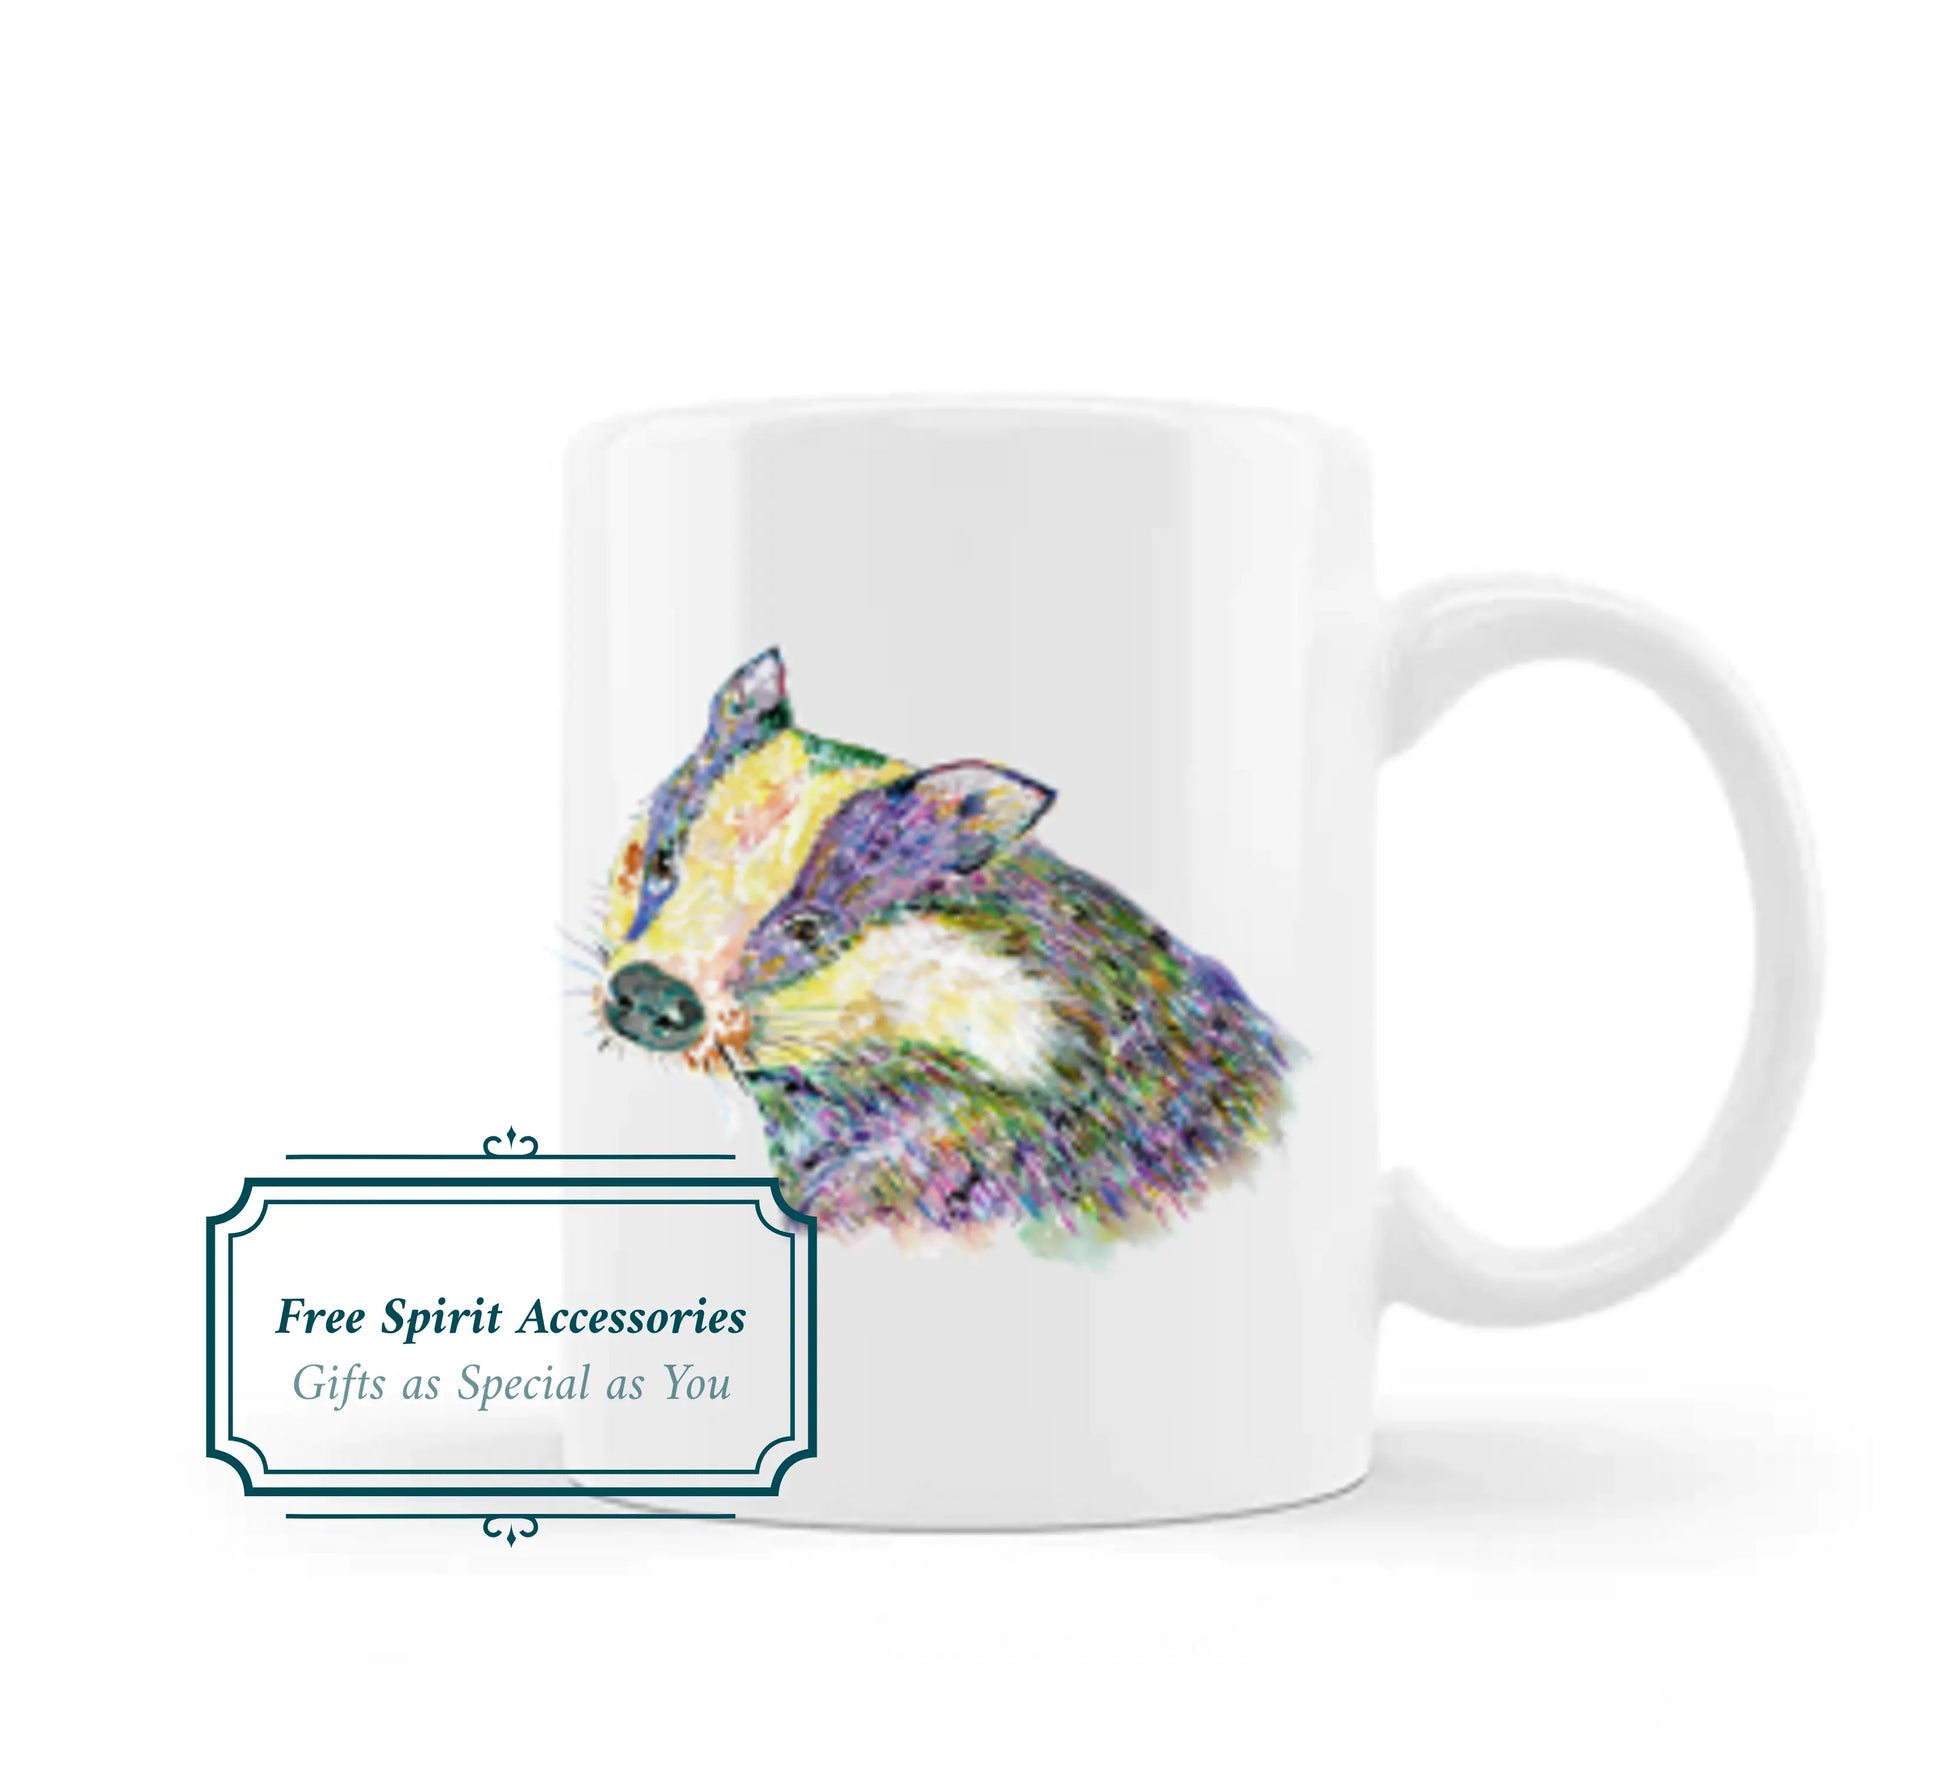  Beautiful Badger Wildlife Coffee Mug by Free Spirit Accessories sold by Free Spirit Accessories